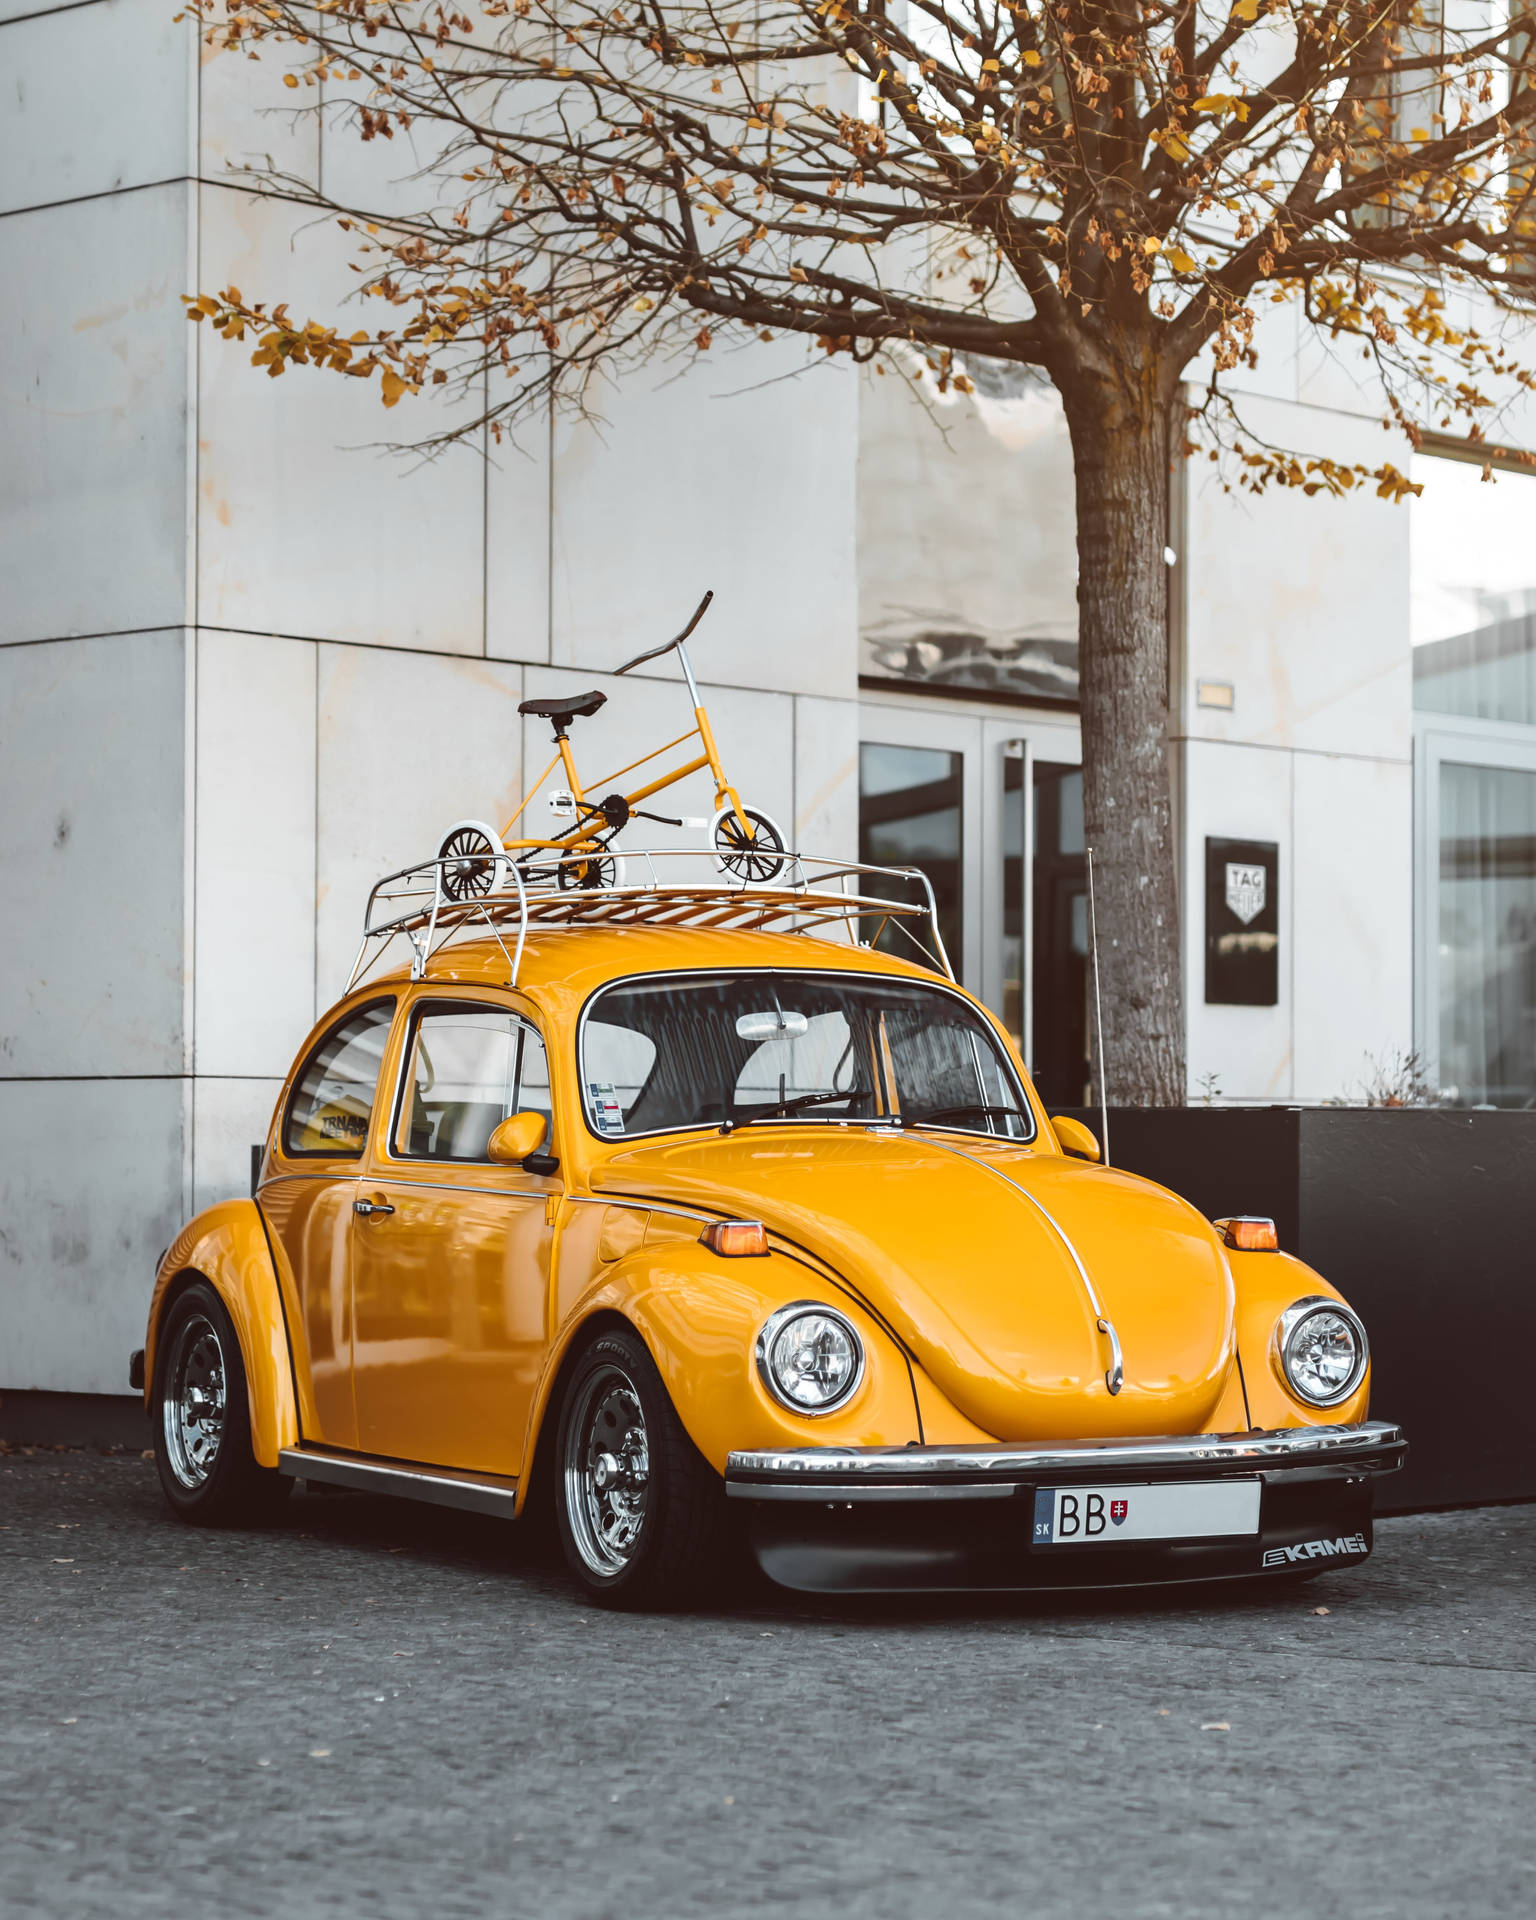 Retro Aesthetic Yellow Beetle Car Wallpaper